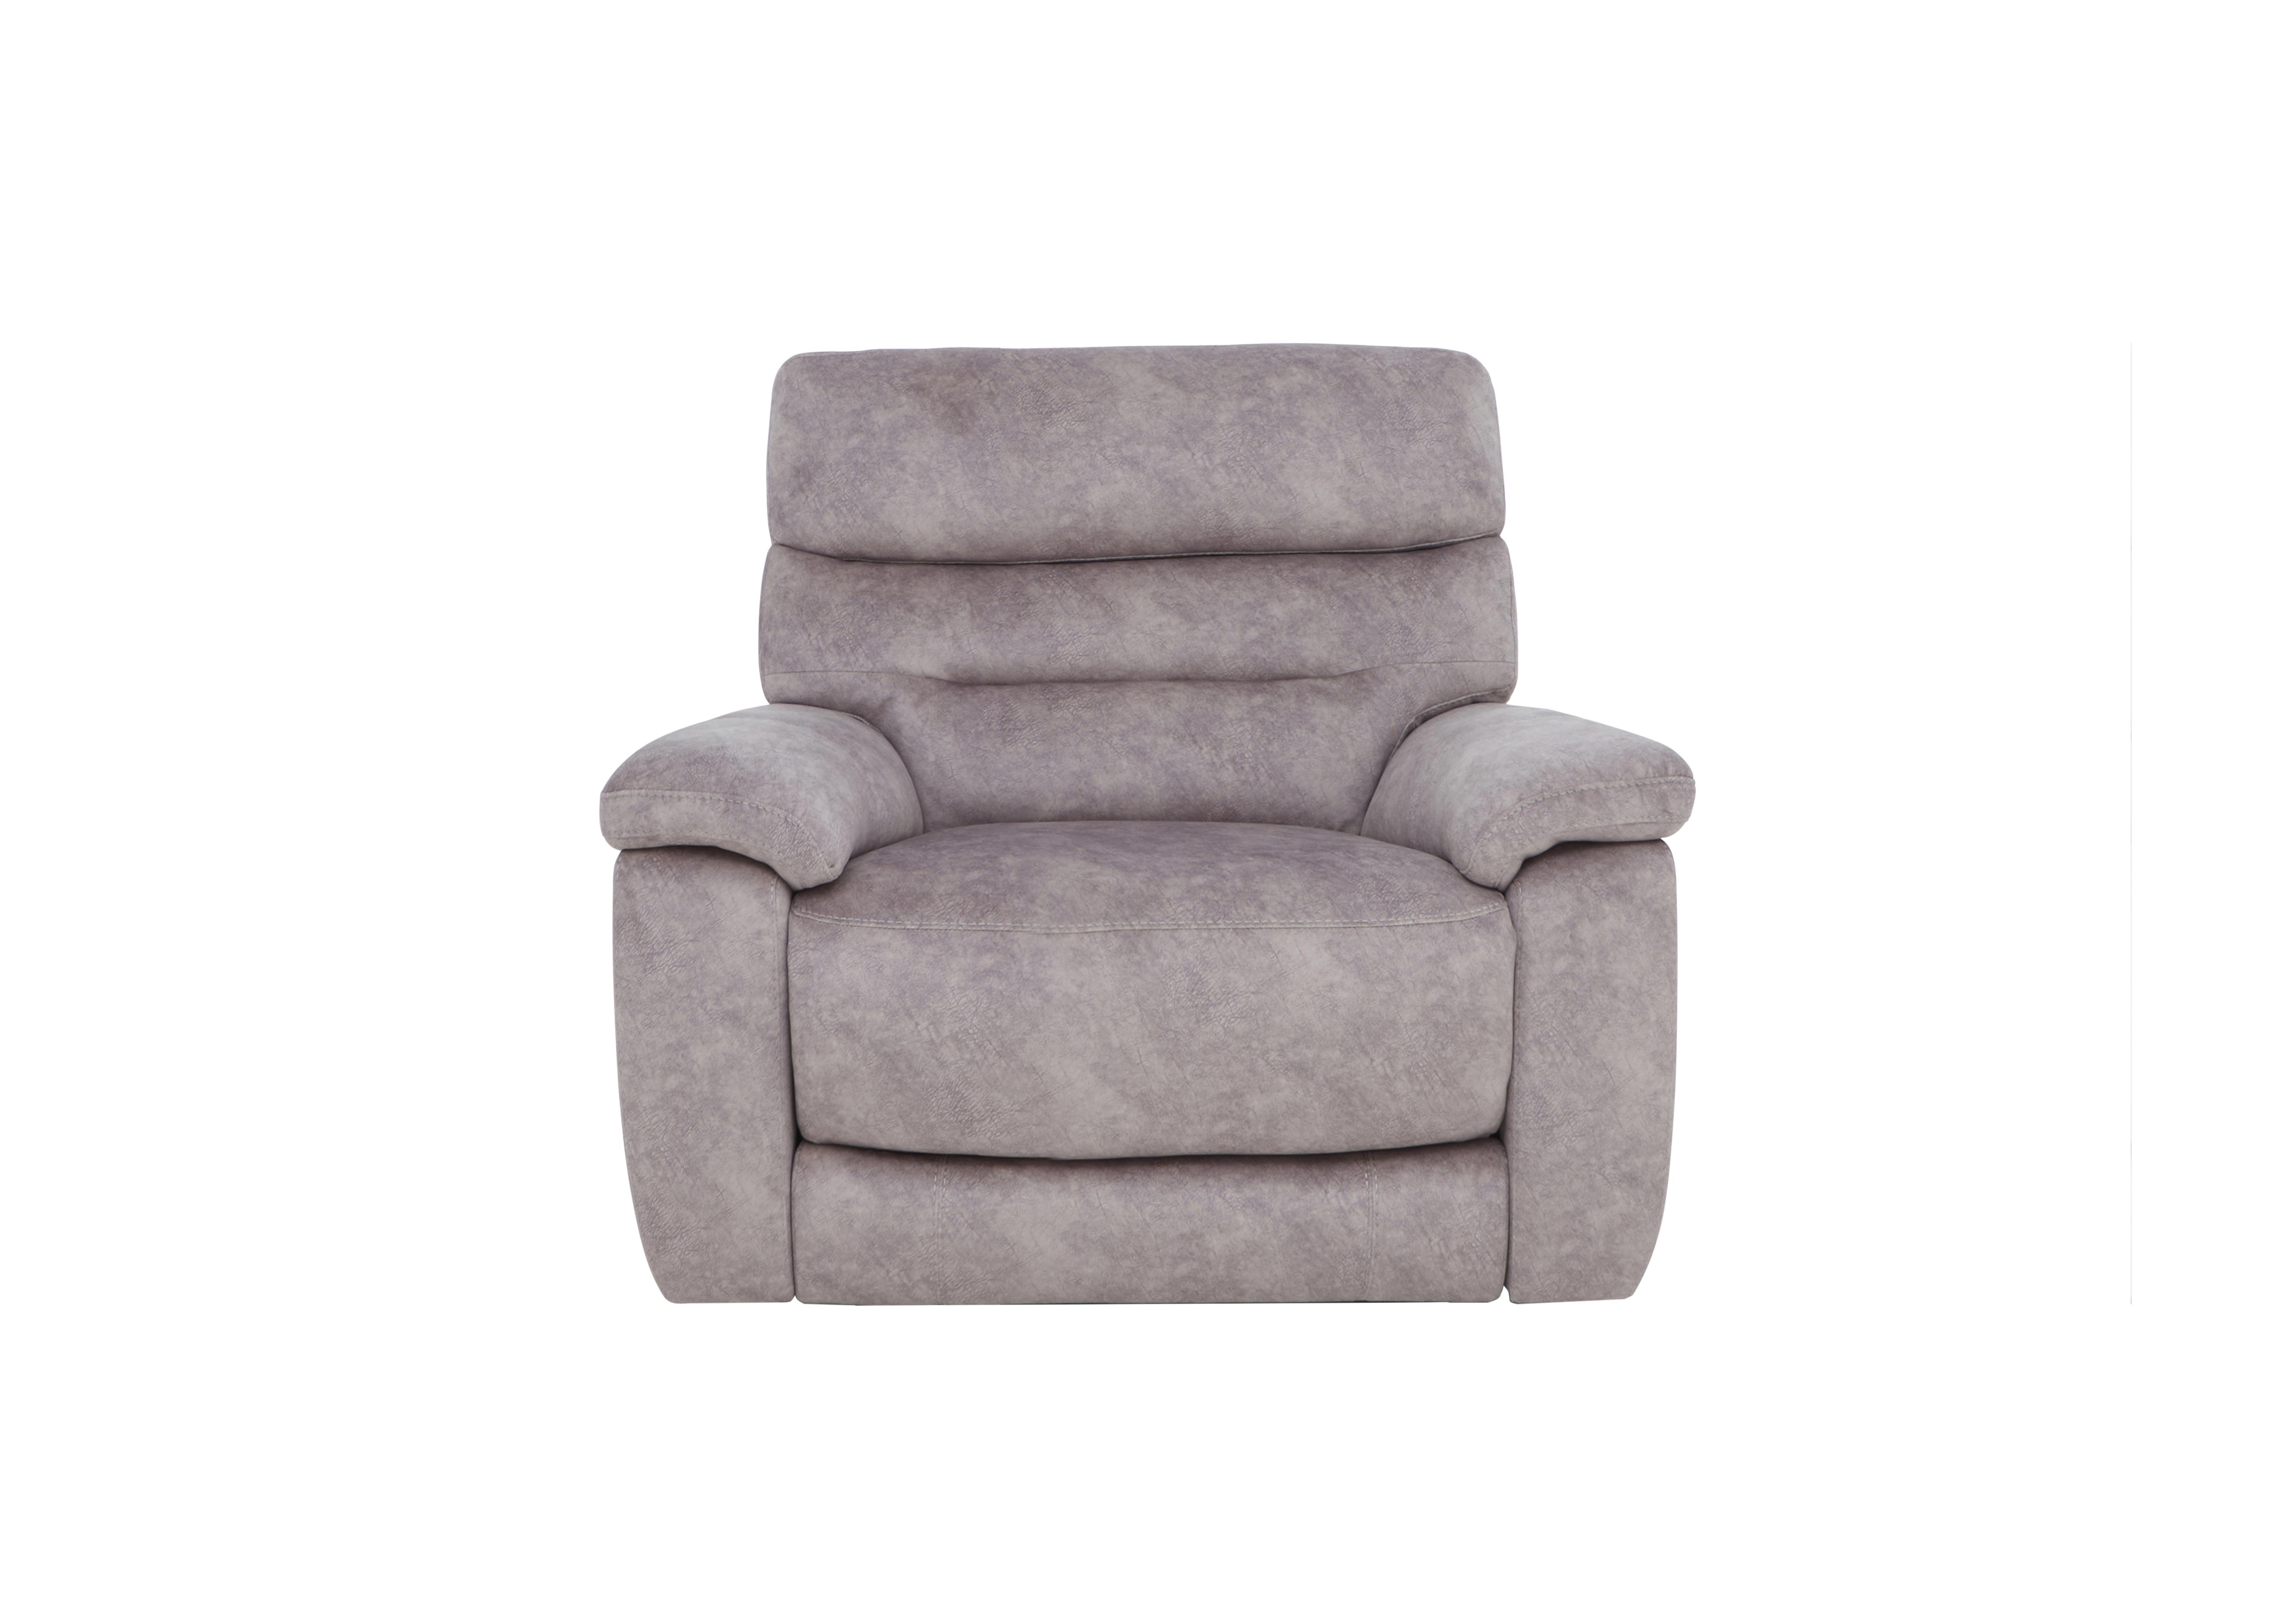 Nimbus Fabric Power Recliner Chair with Power Headrest and Power Lumbar in Bfa-Bnn-R28 Grey on Furniture Village